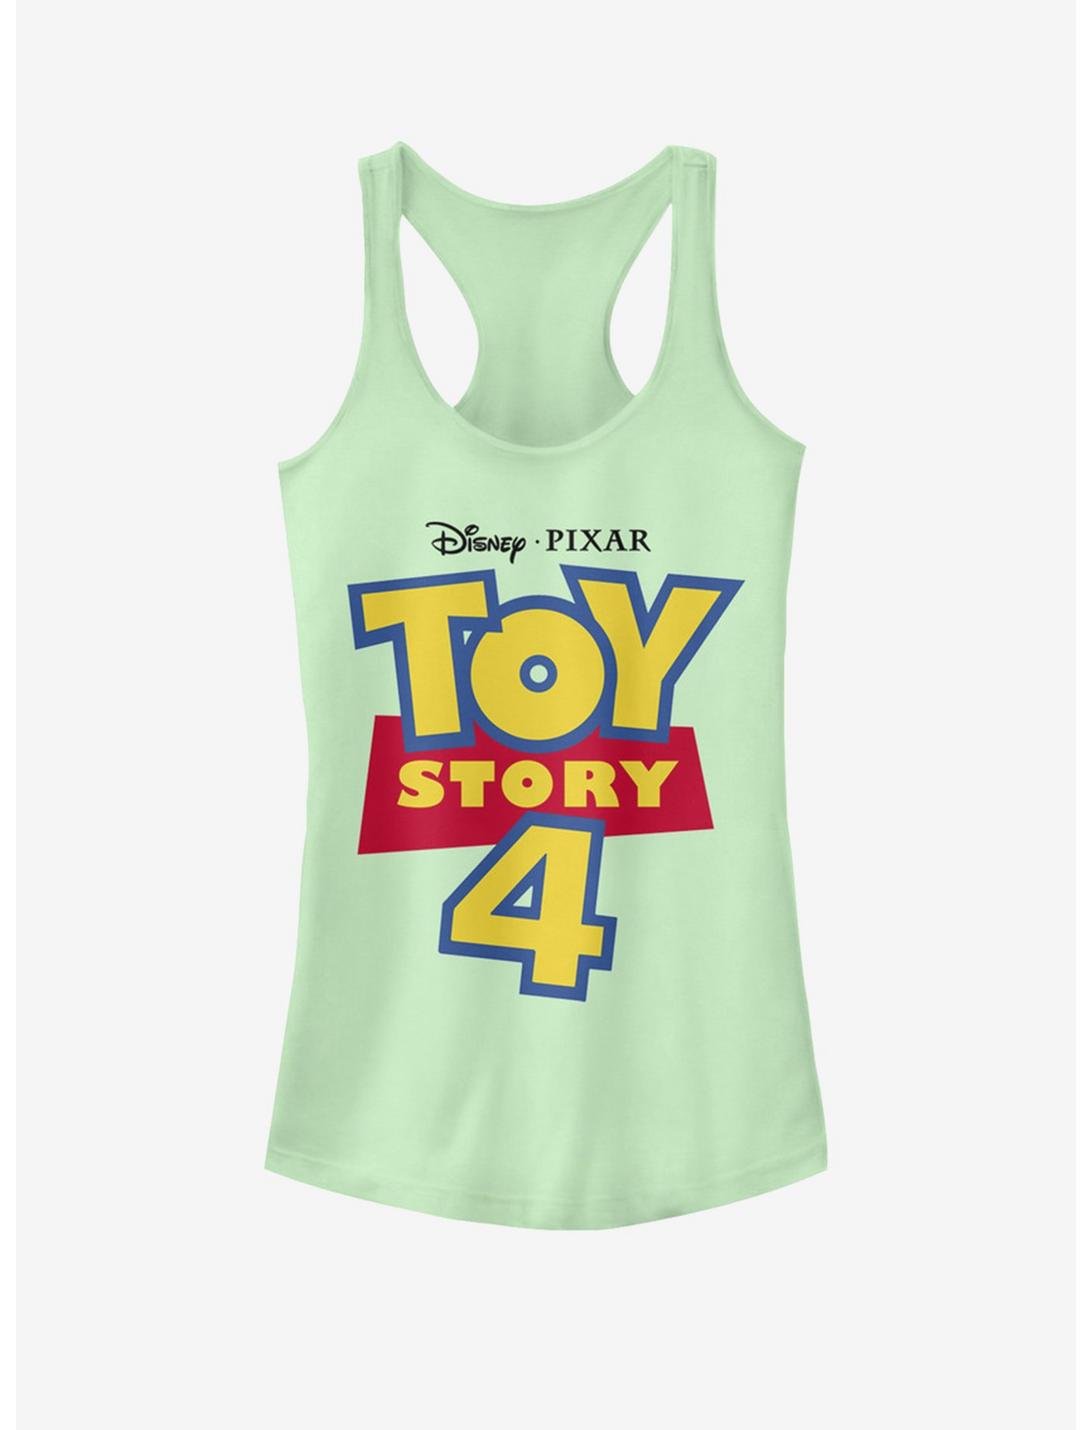 Disney Pixar Toy Story 4 Full Color Logo Girls Mint Green Tank Top, MINT, hi-res